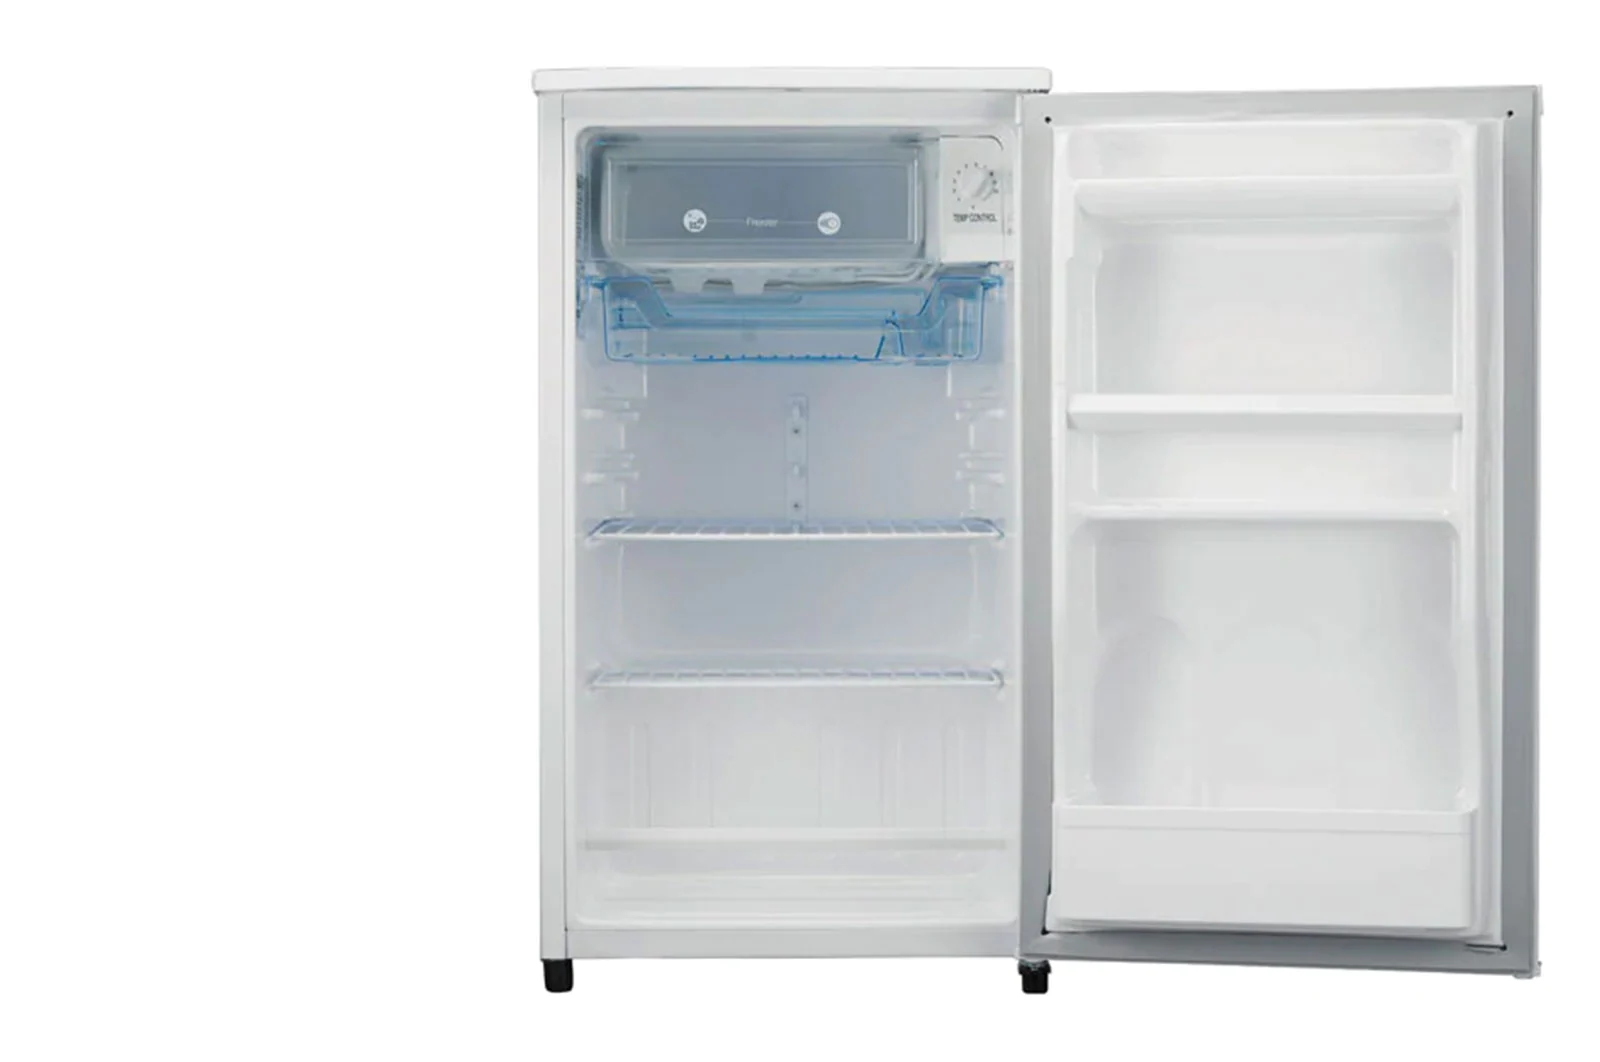 LG 96 Liters Single Door Mini Refrigerator - Silver